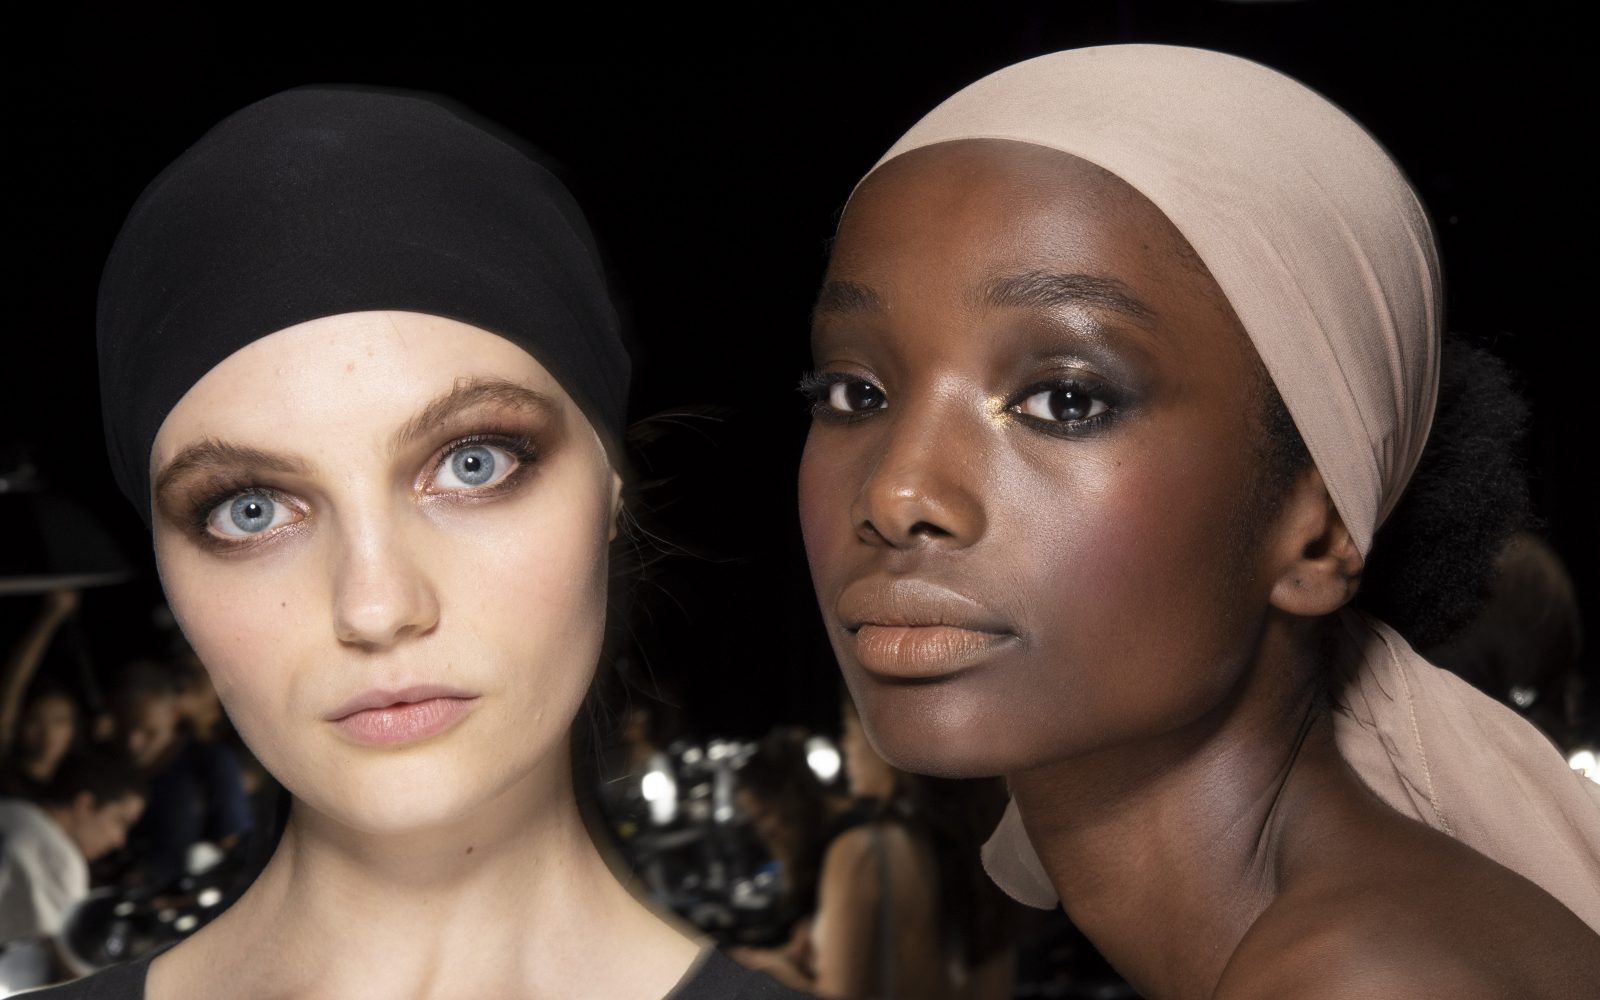 Five Ways To Wear A Headscarf